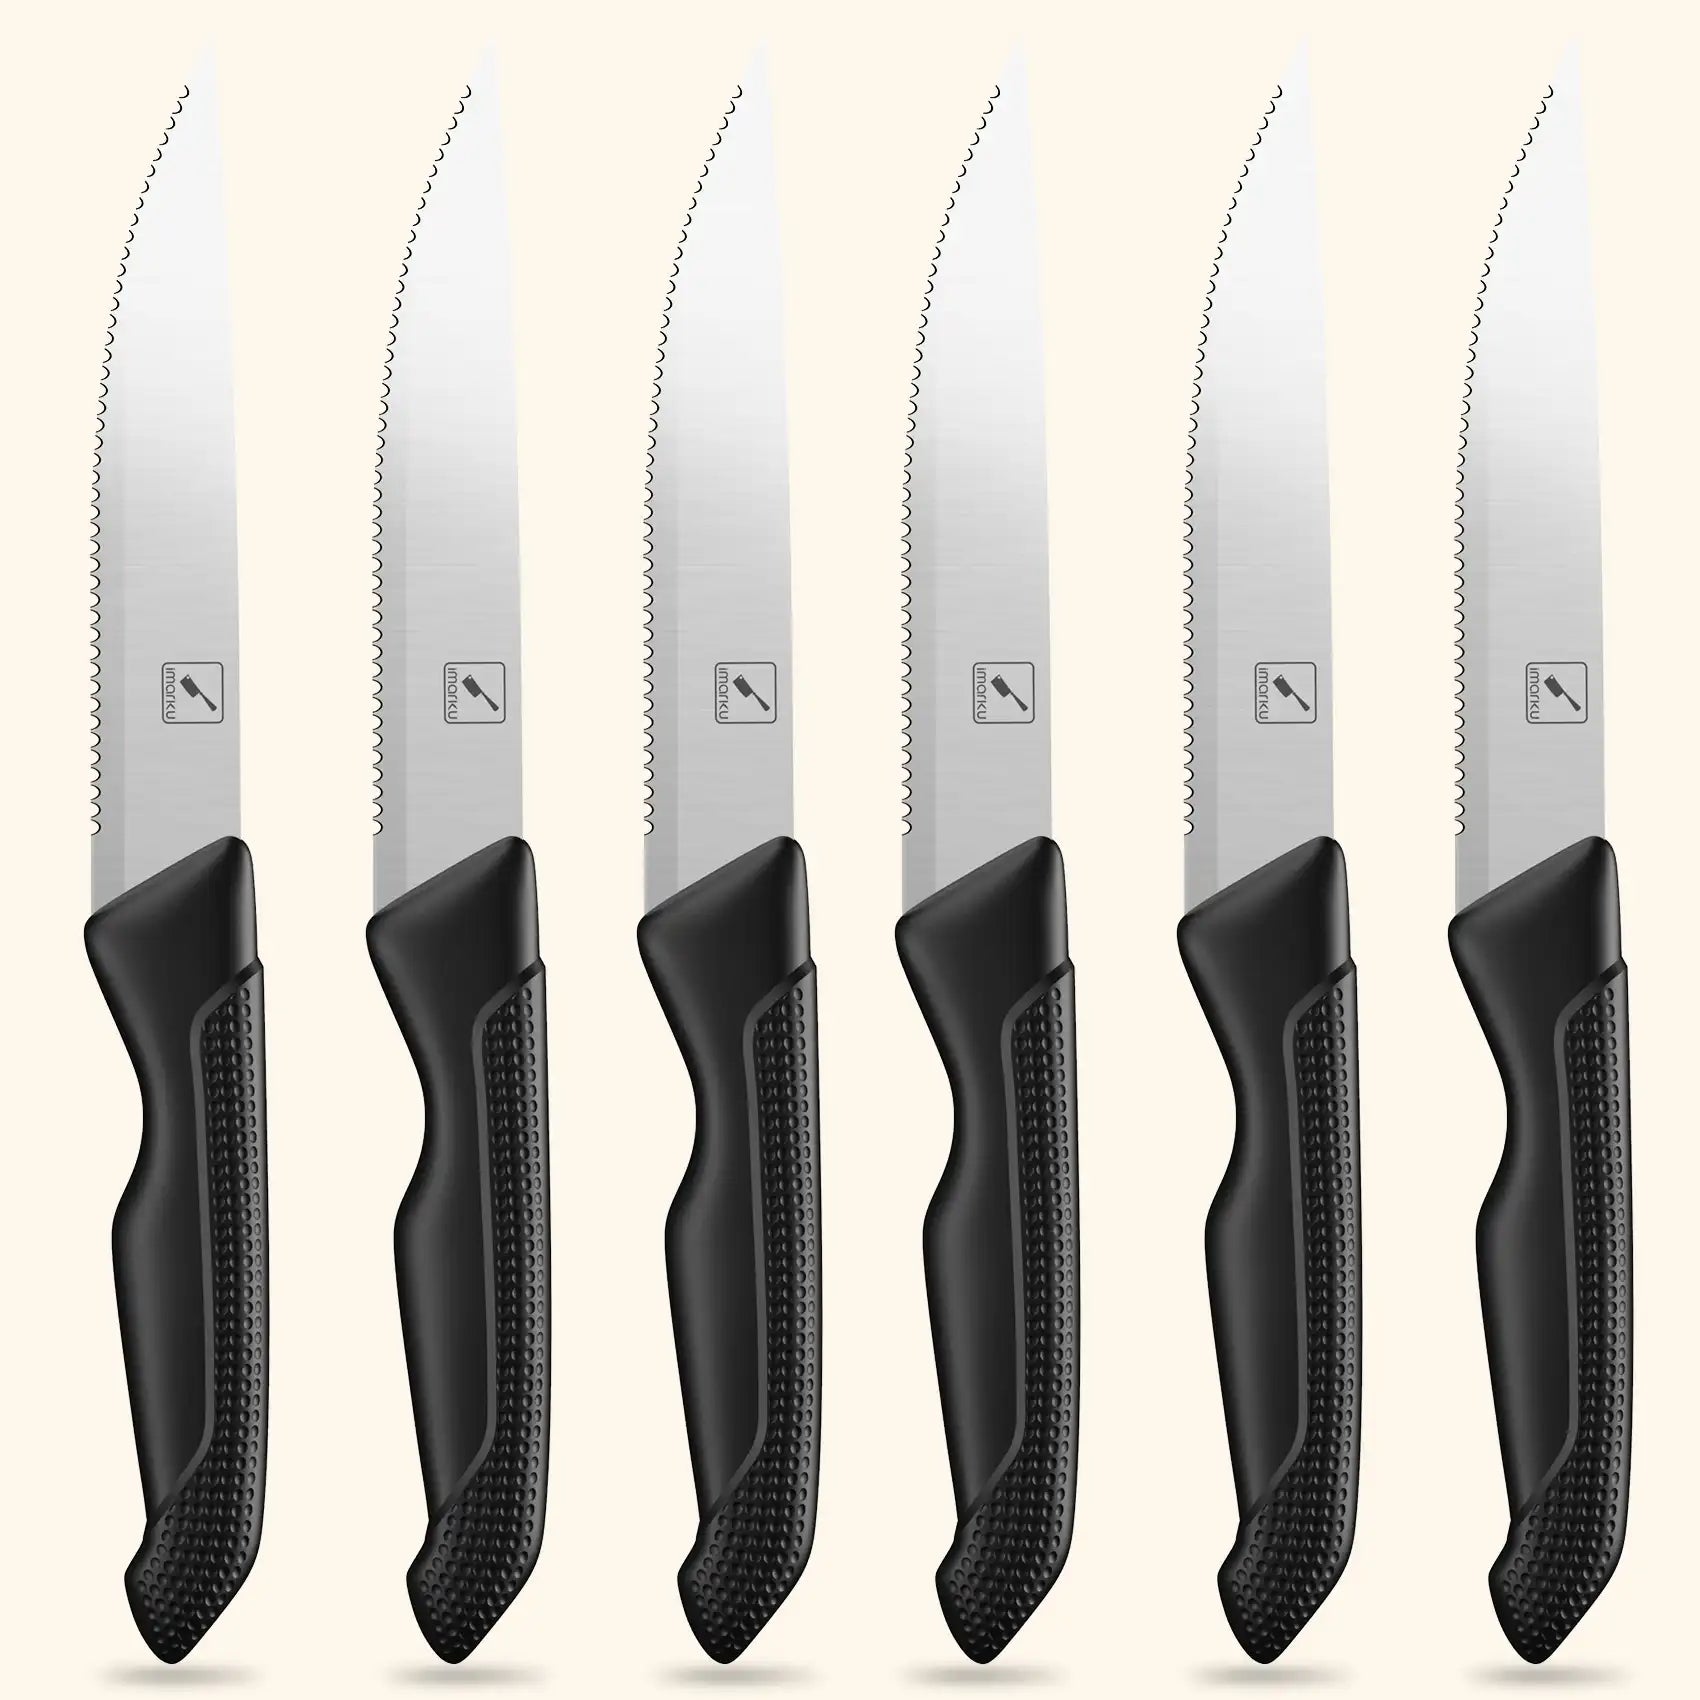 iMarku 4.5 Inch Professional Steak Knife Set of 6 Knives Culinary Kitchen  New